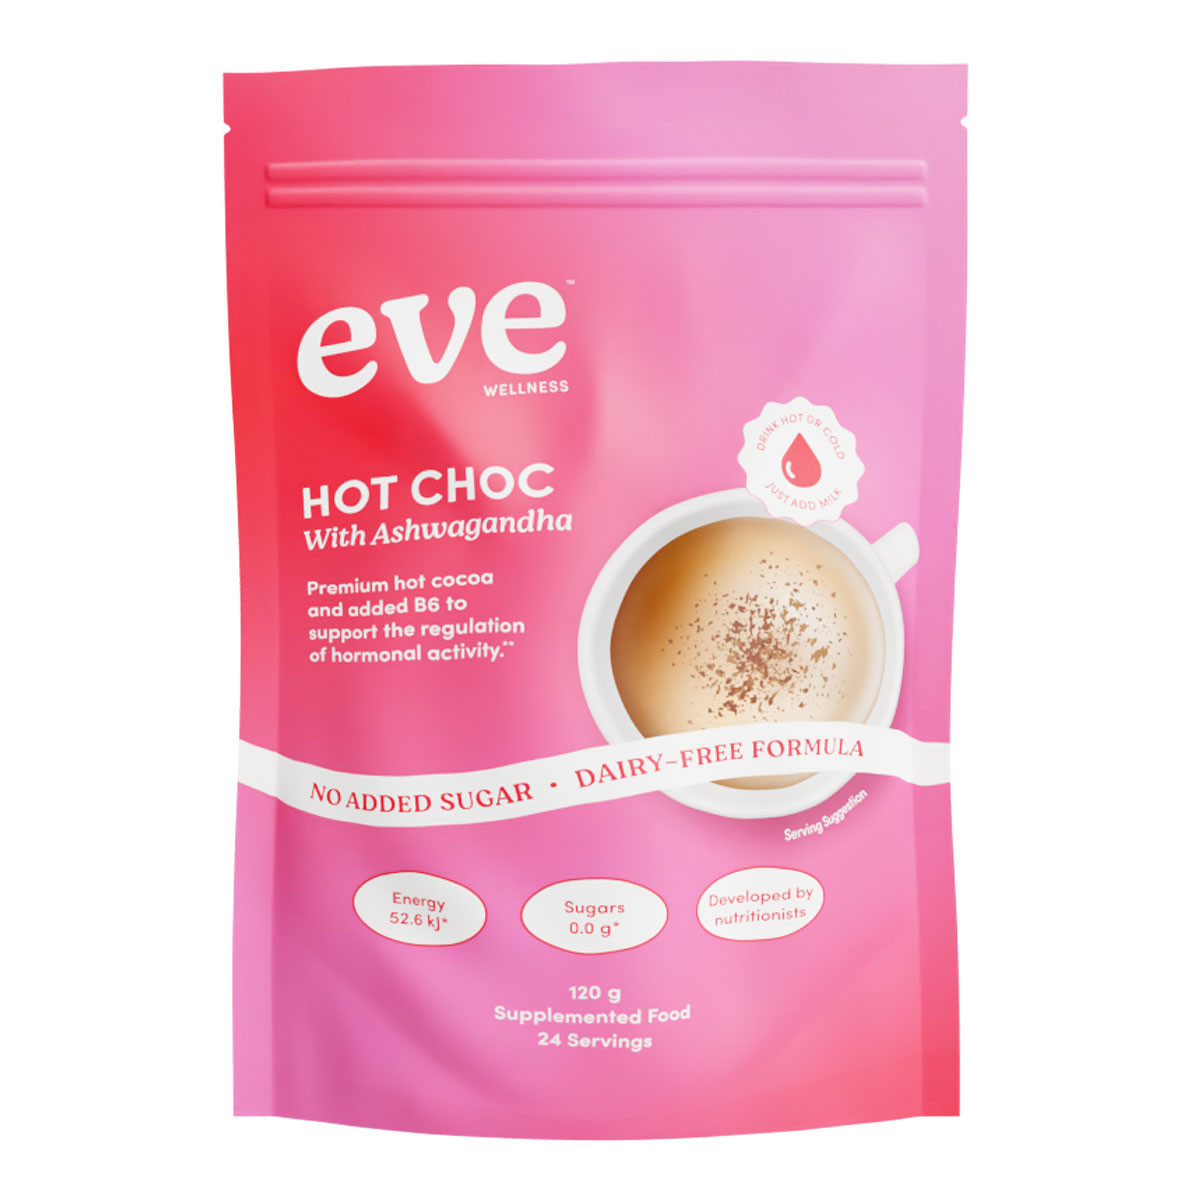 Eve Hot Choc with Ashwagandha 120g